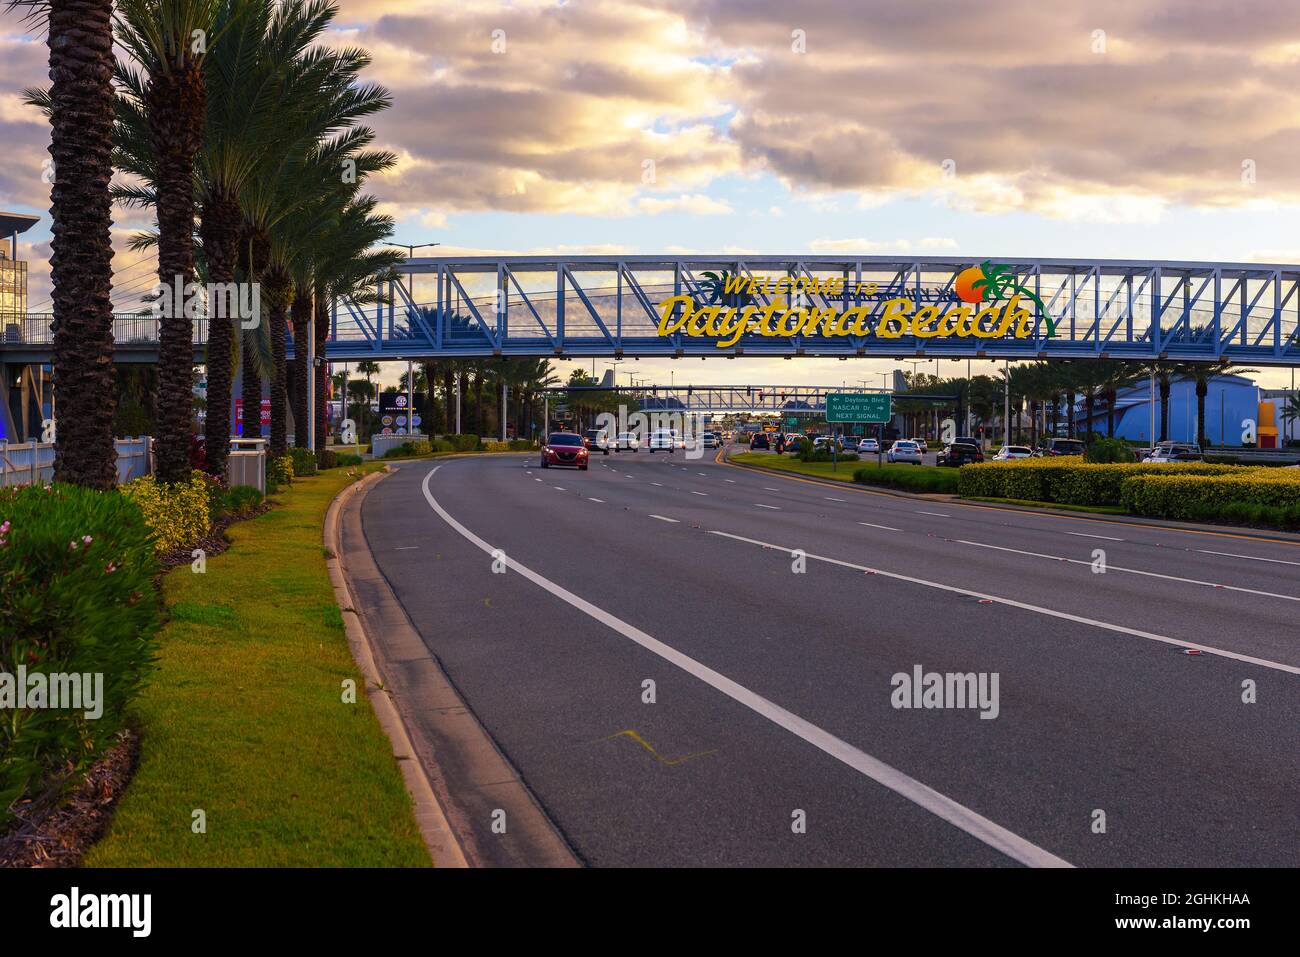 A welcome sign in Daytona Beach, Florida. Stock Photo